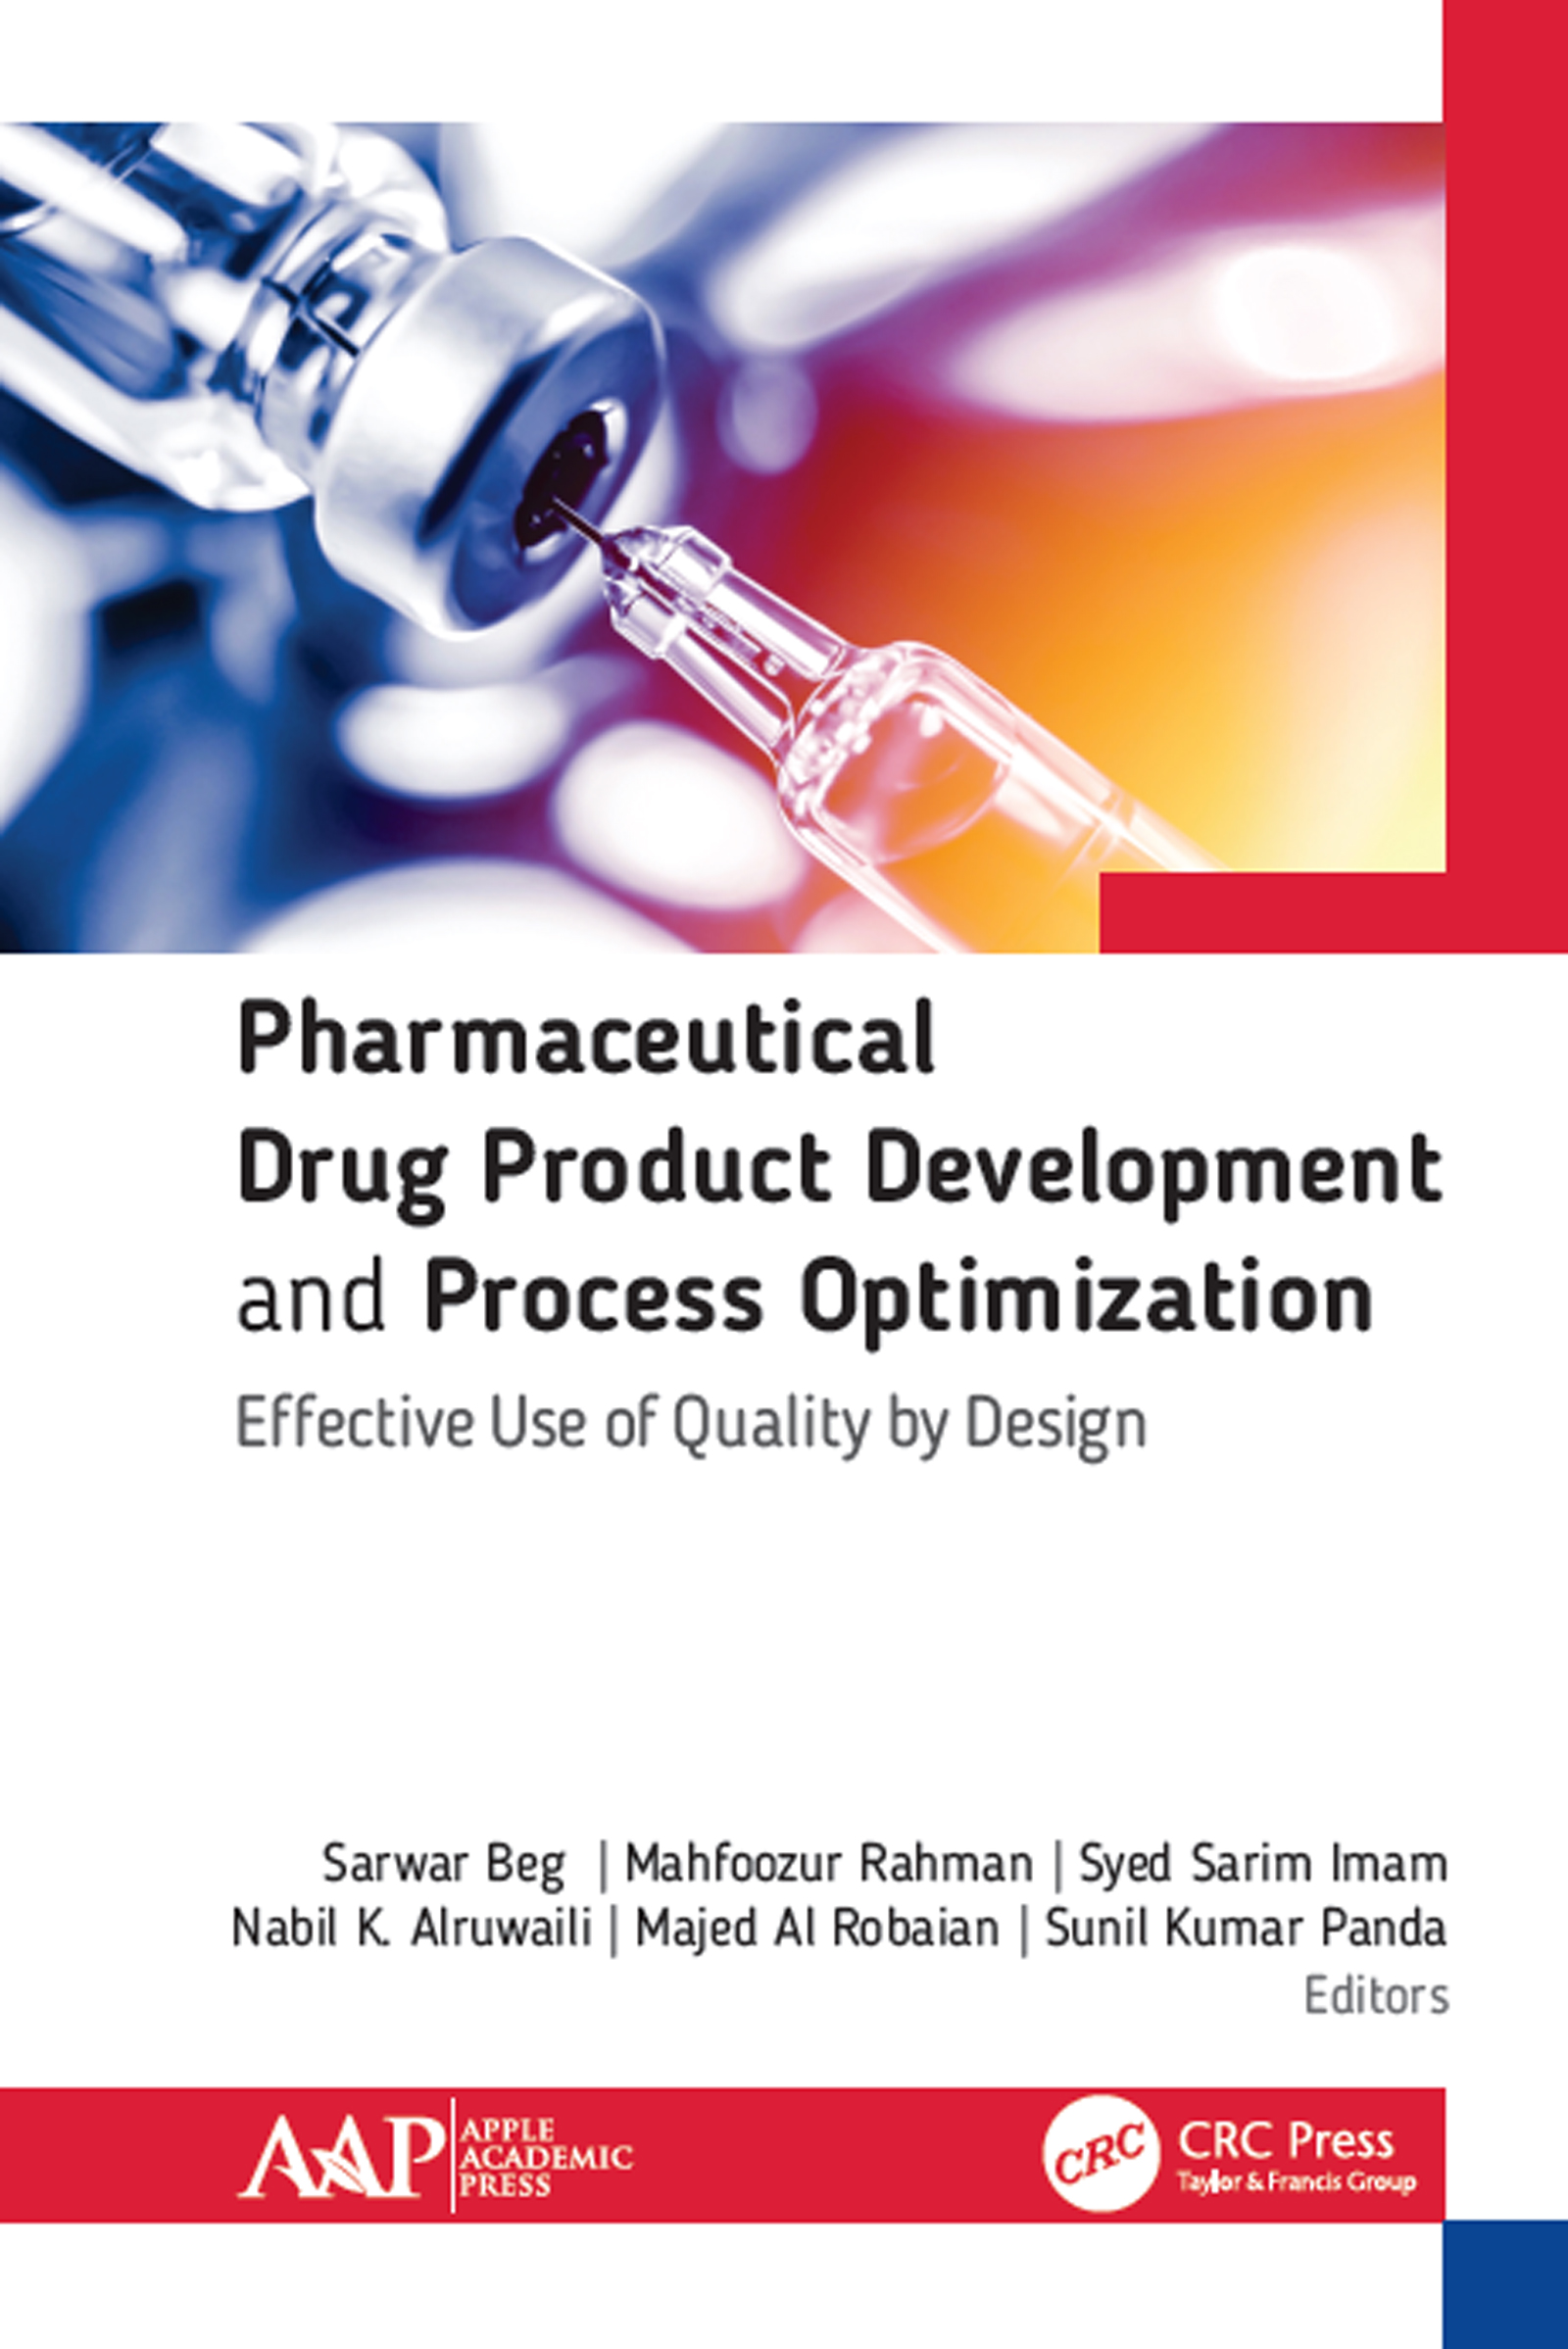 Pharmaceutical Drug Product Development and Process Optimization.jpg